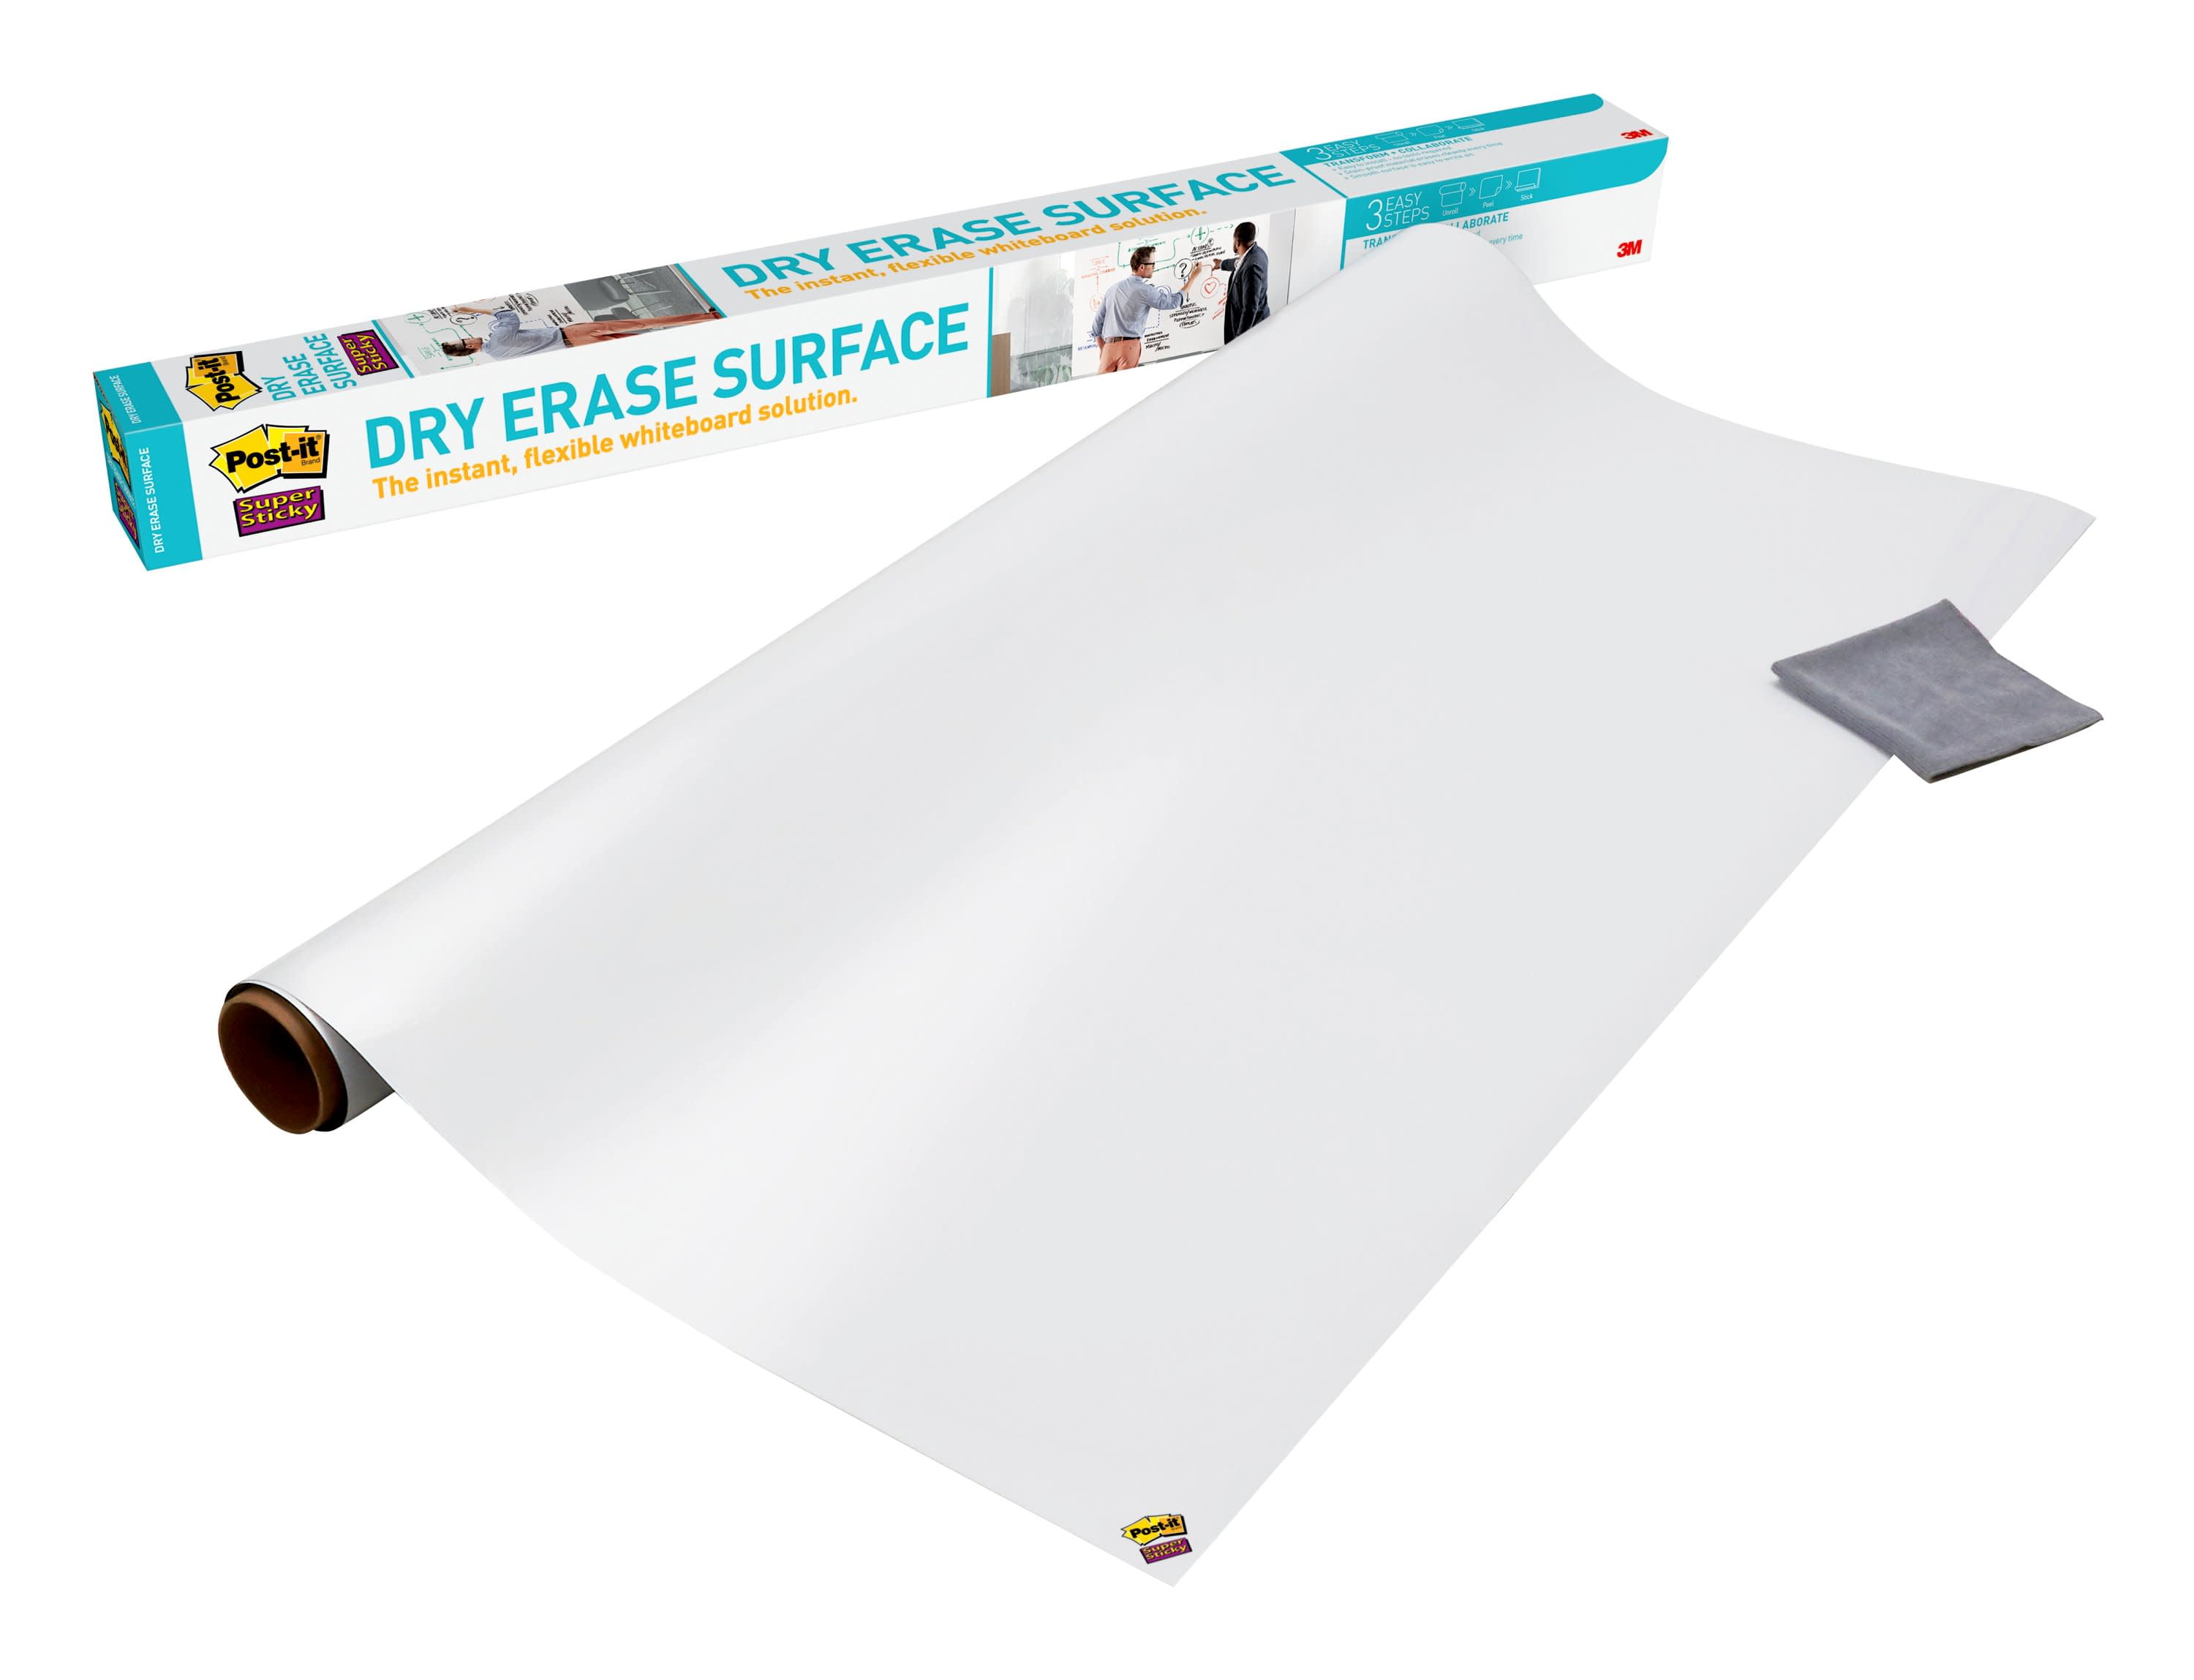 Self-Stick Dry Erase Sheets, 8.5 x 11, White Surface, 25/Box